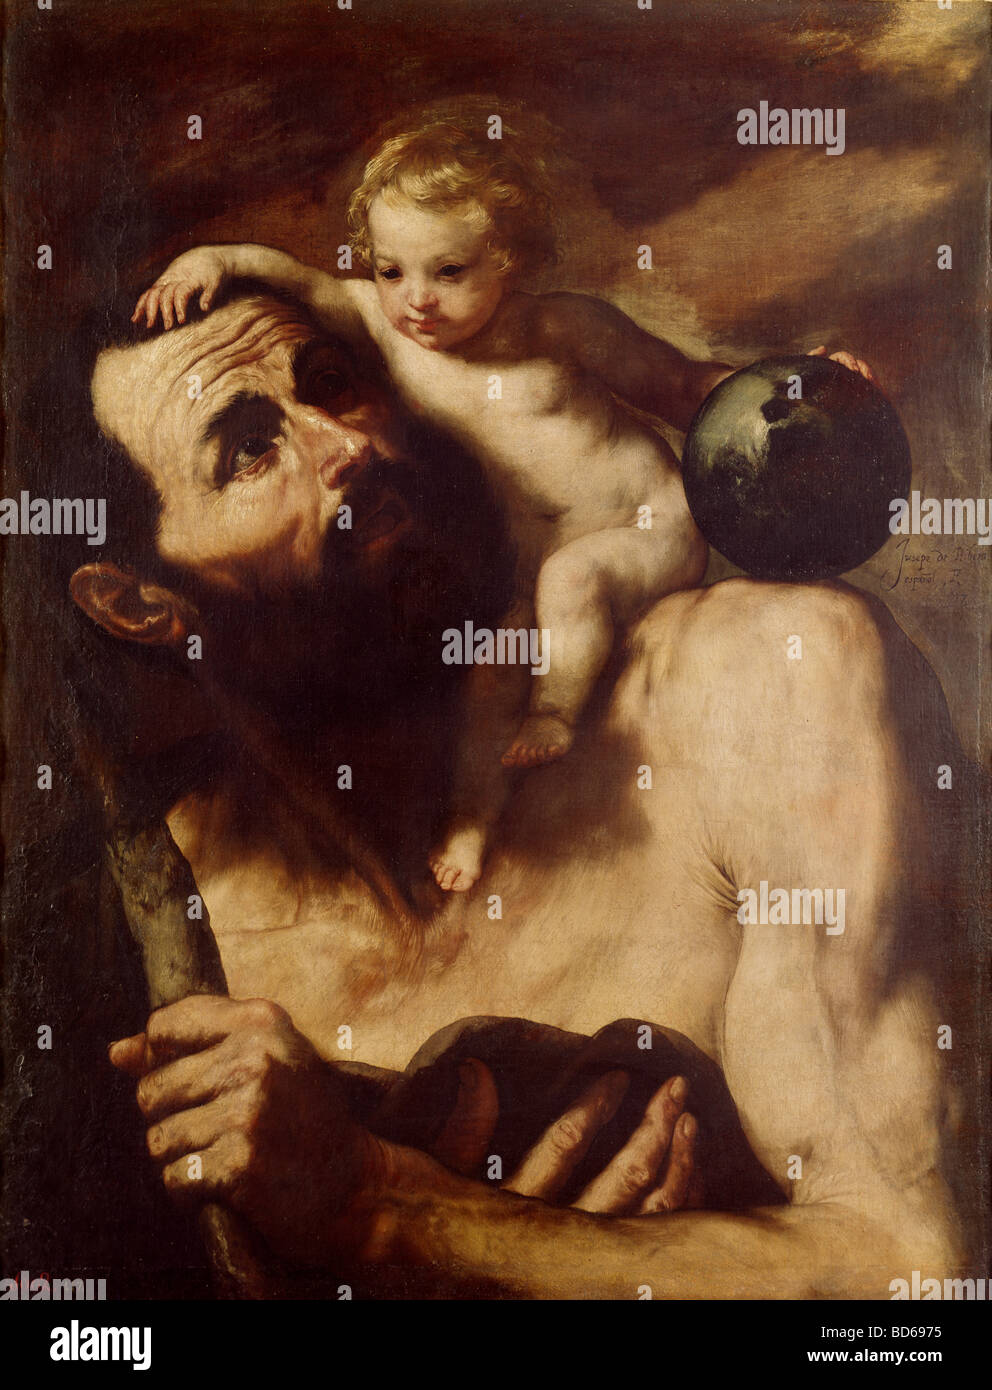 fine arts, Ribera, Jusepe de (1591 - 1652), painting, 'St. Christopher', oil on canvas, 1637, Museo del Prado, Madrid, lo Spa Stock Photo